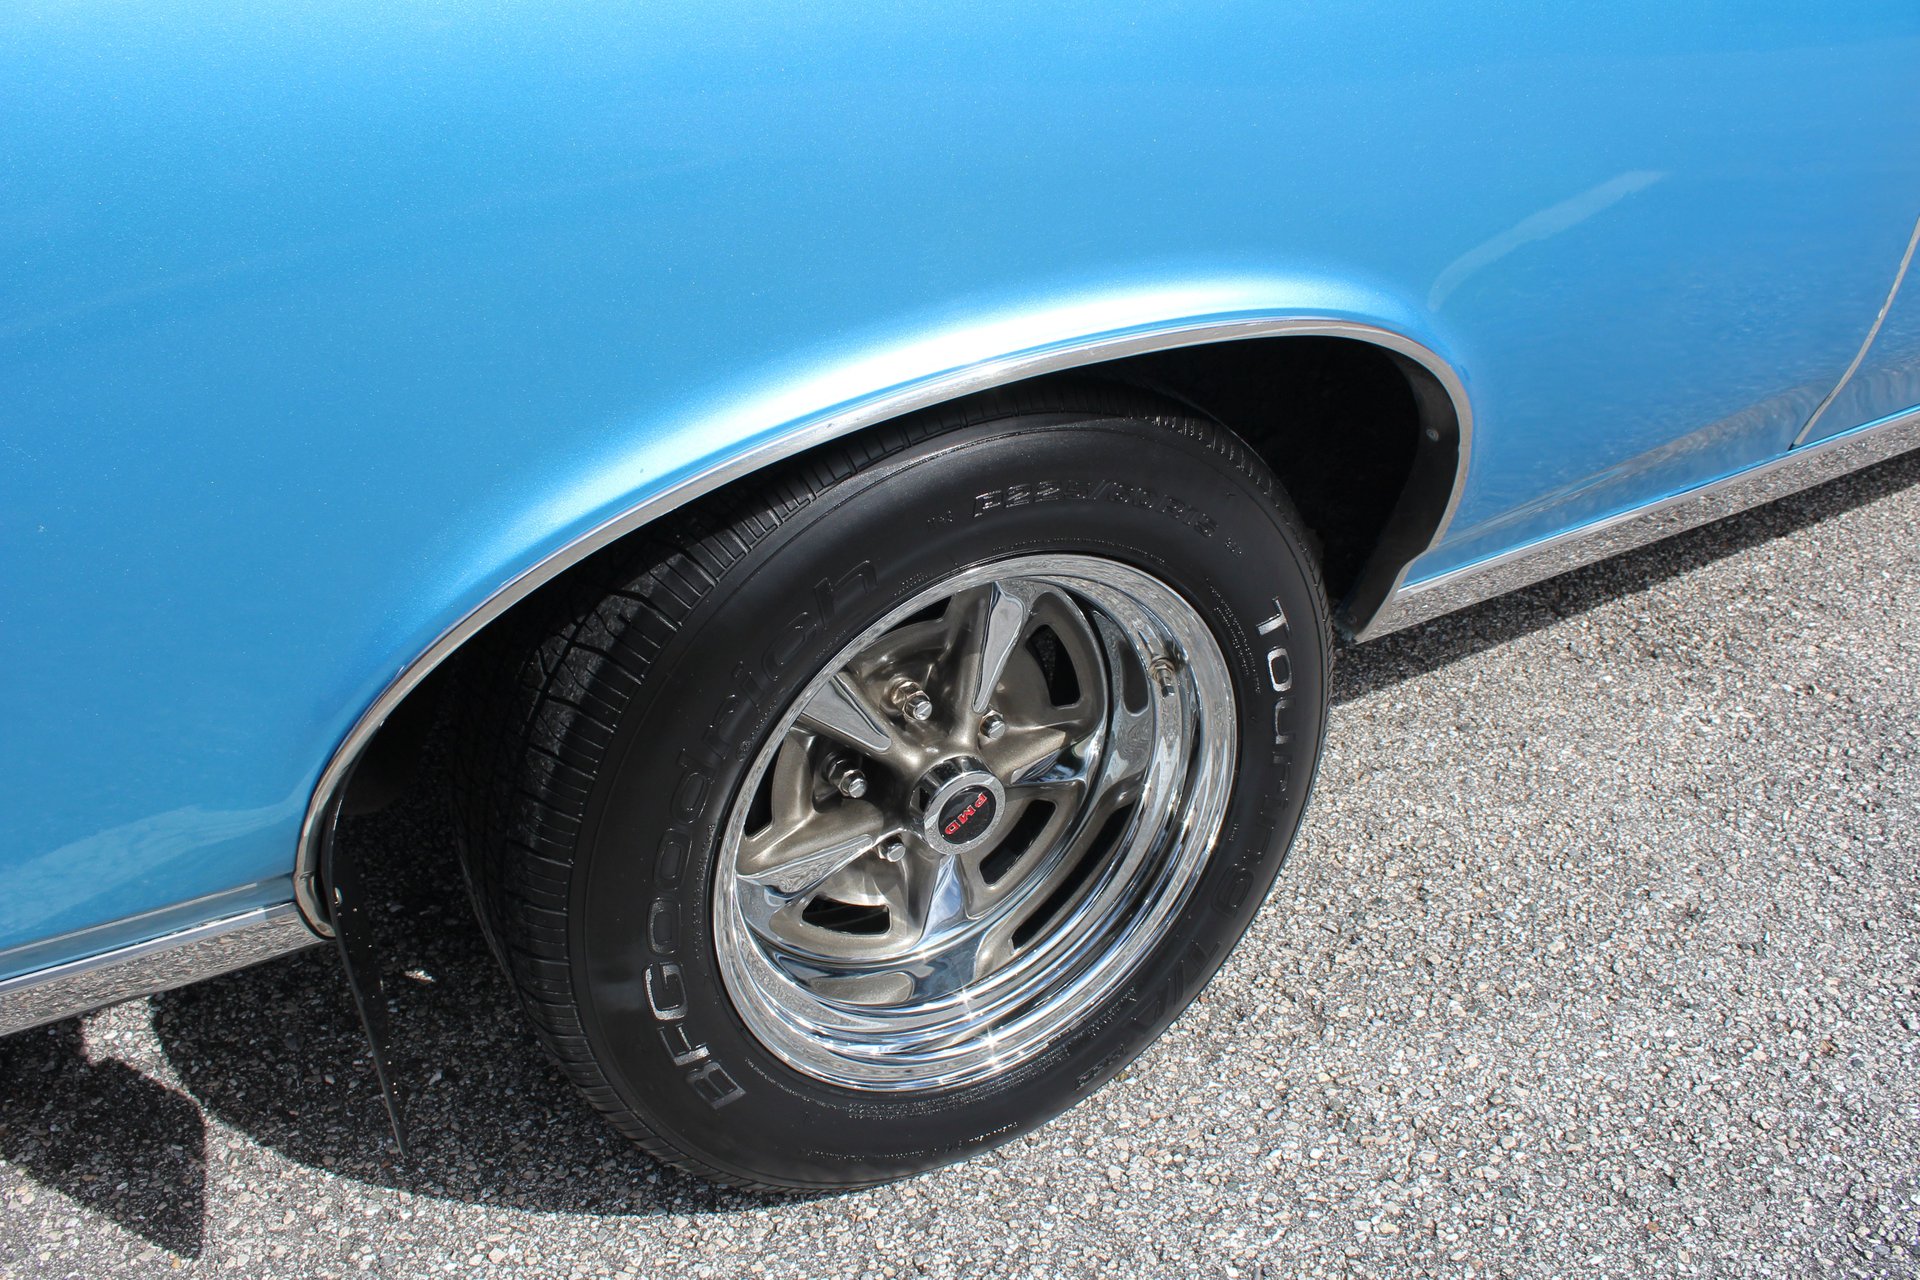 For Sale 1967 Pontiac Tempest 4 speed